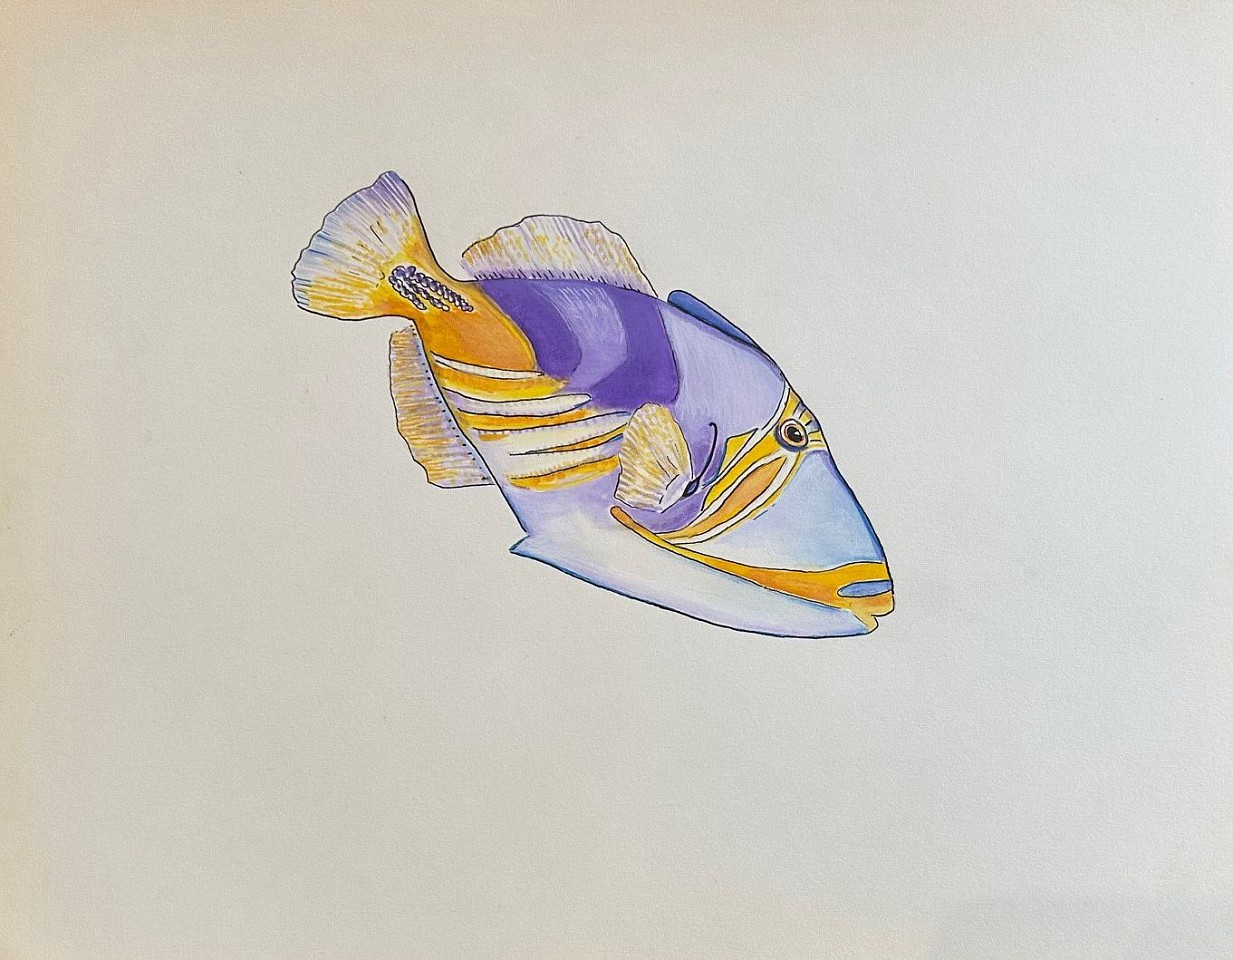 Violetta Glemser, Humahumanukanuka apuaa
watercolor on paper, 10 1/2"" x 13 1/2""
SD 1123.01
$950